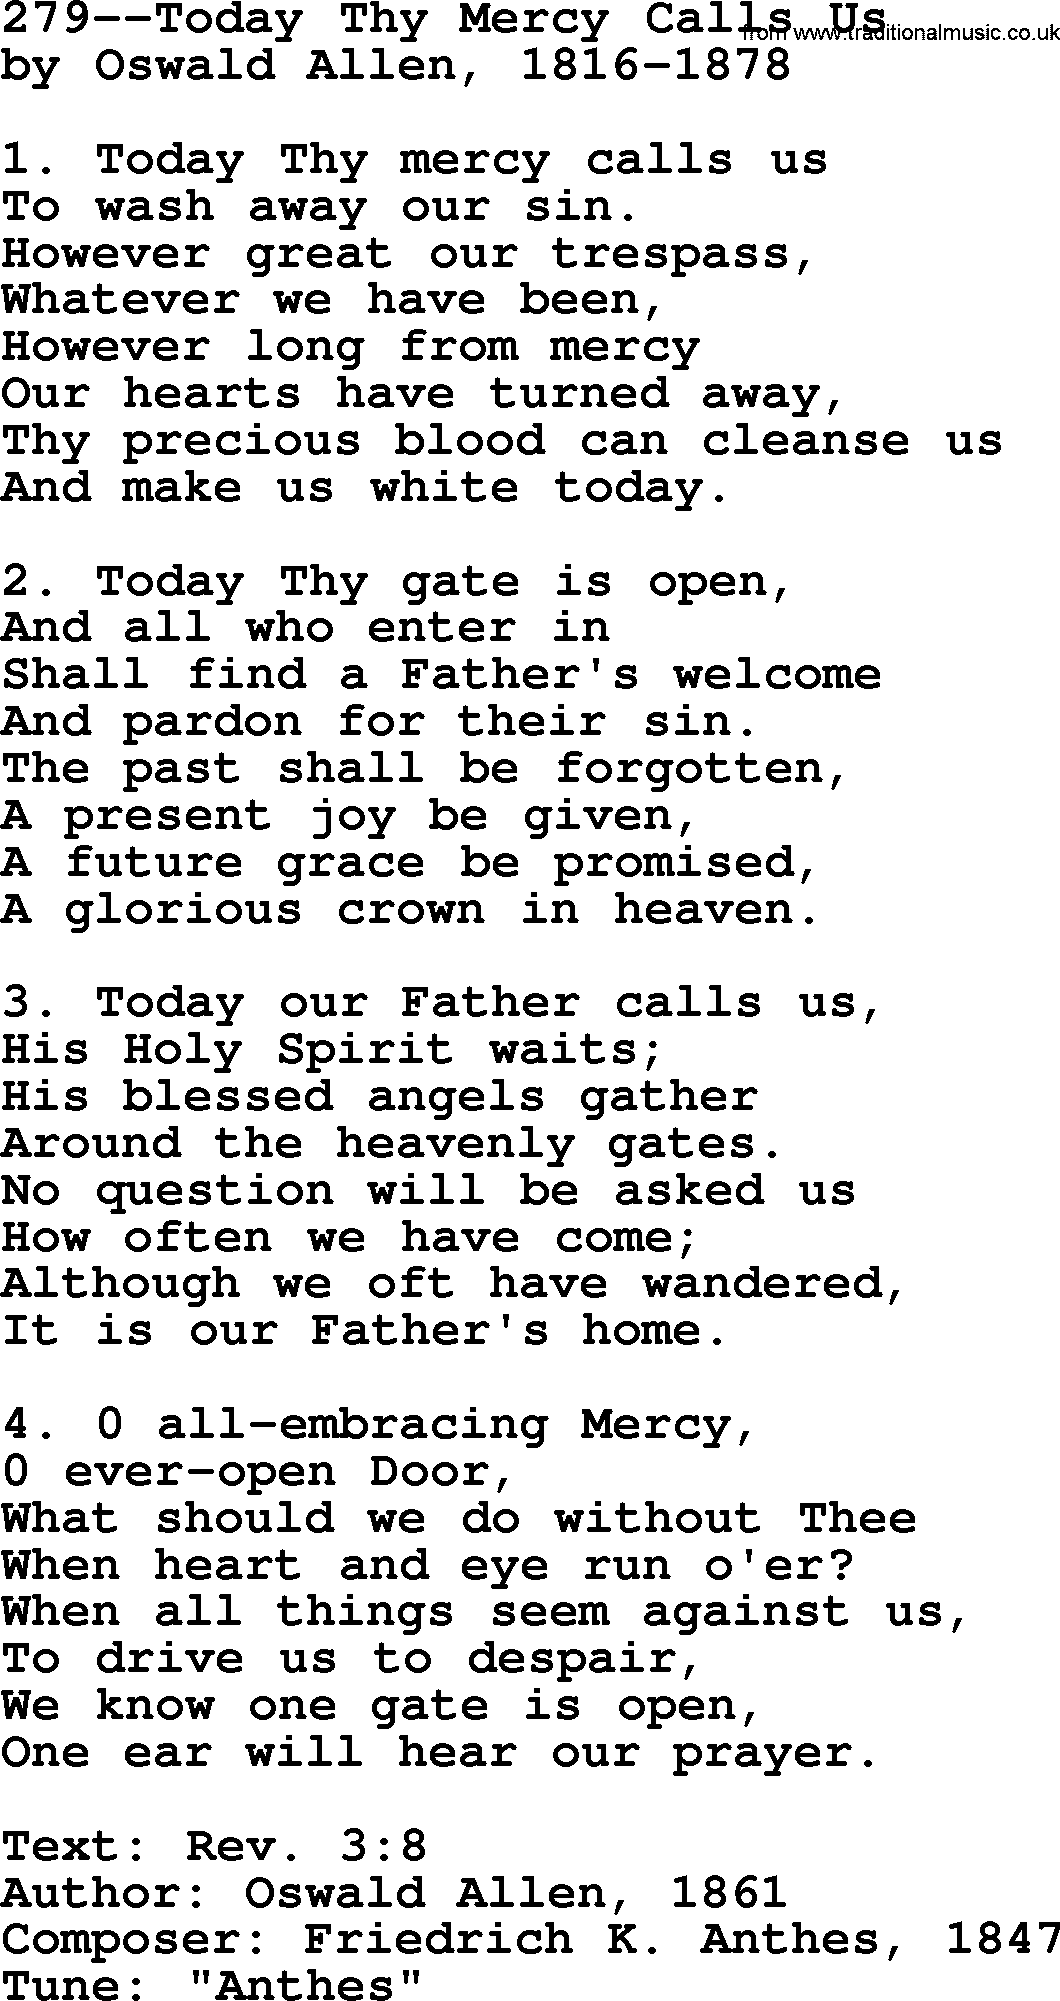 Lutheran Hymn: 279--Today Thy Mercy Calls Us.txt lyrics with PDF